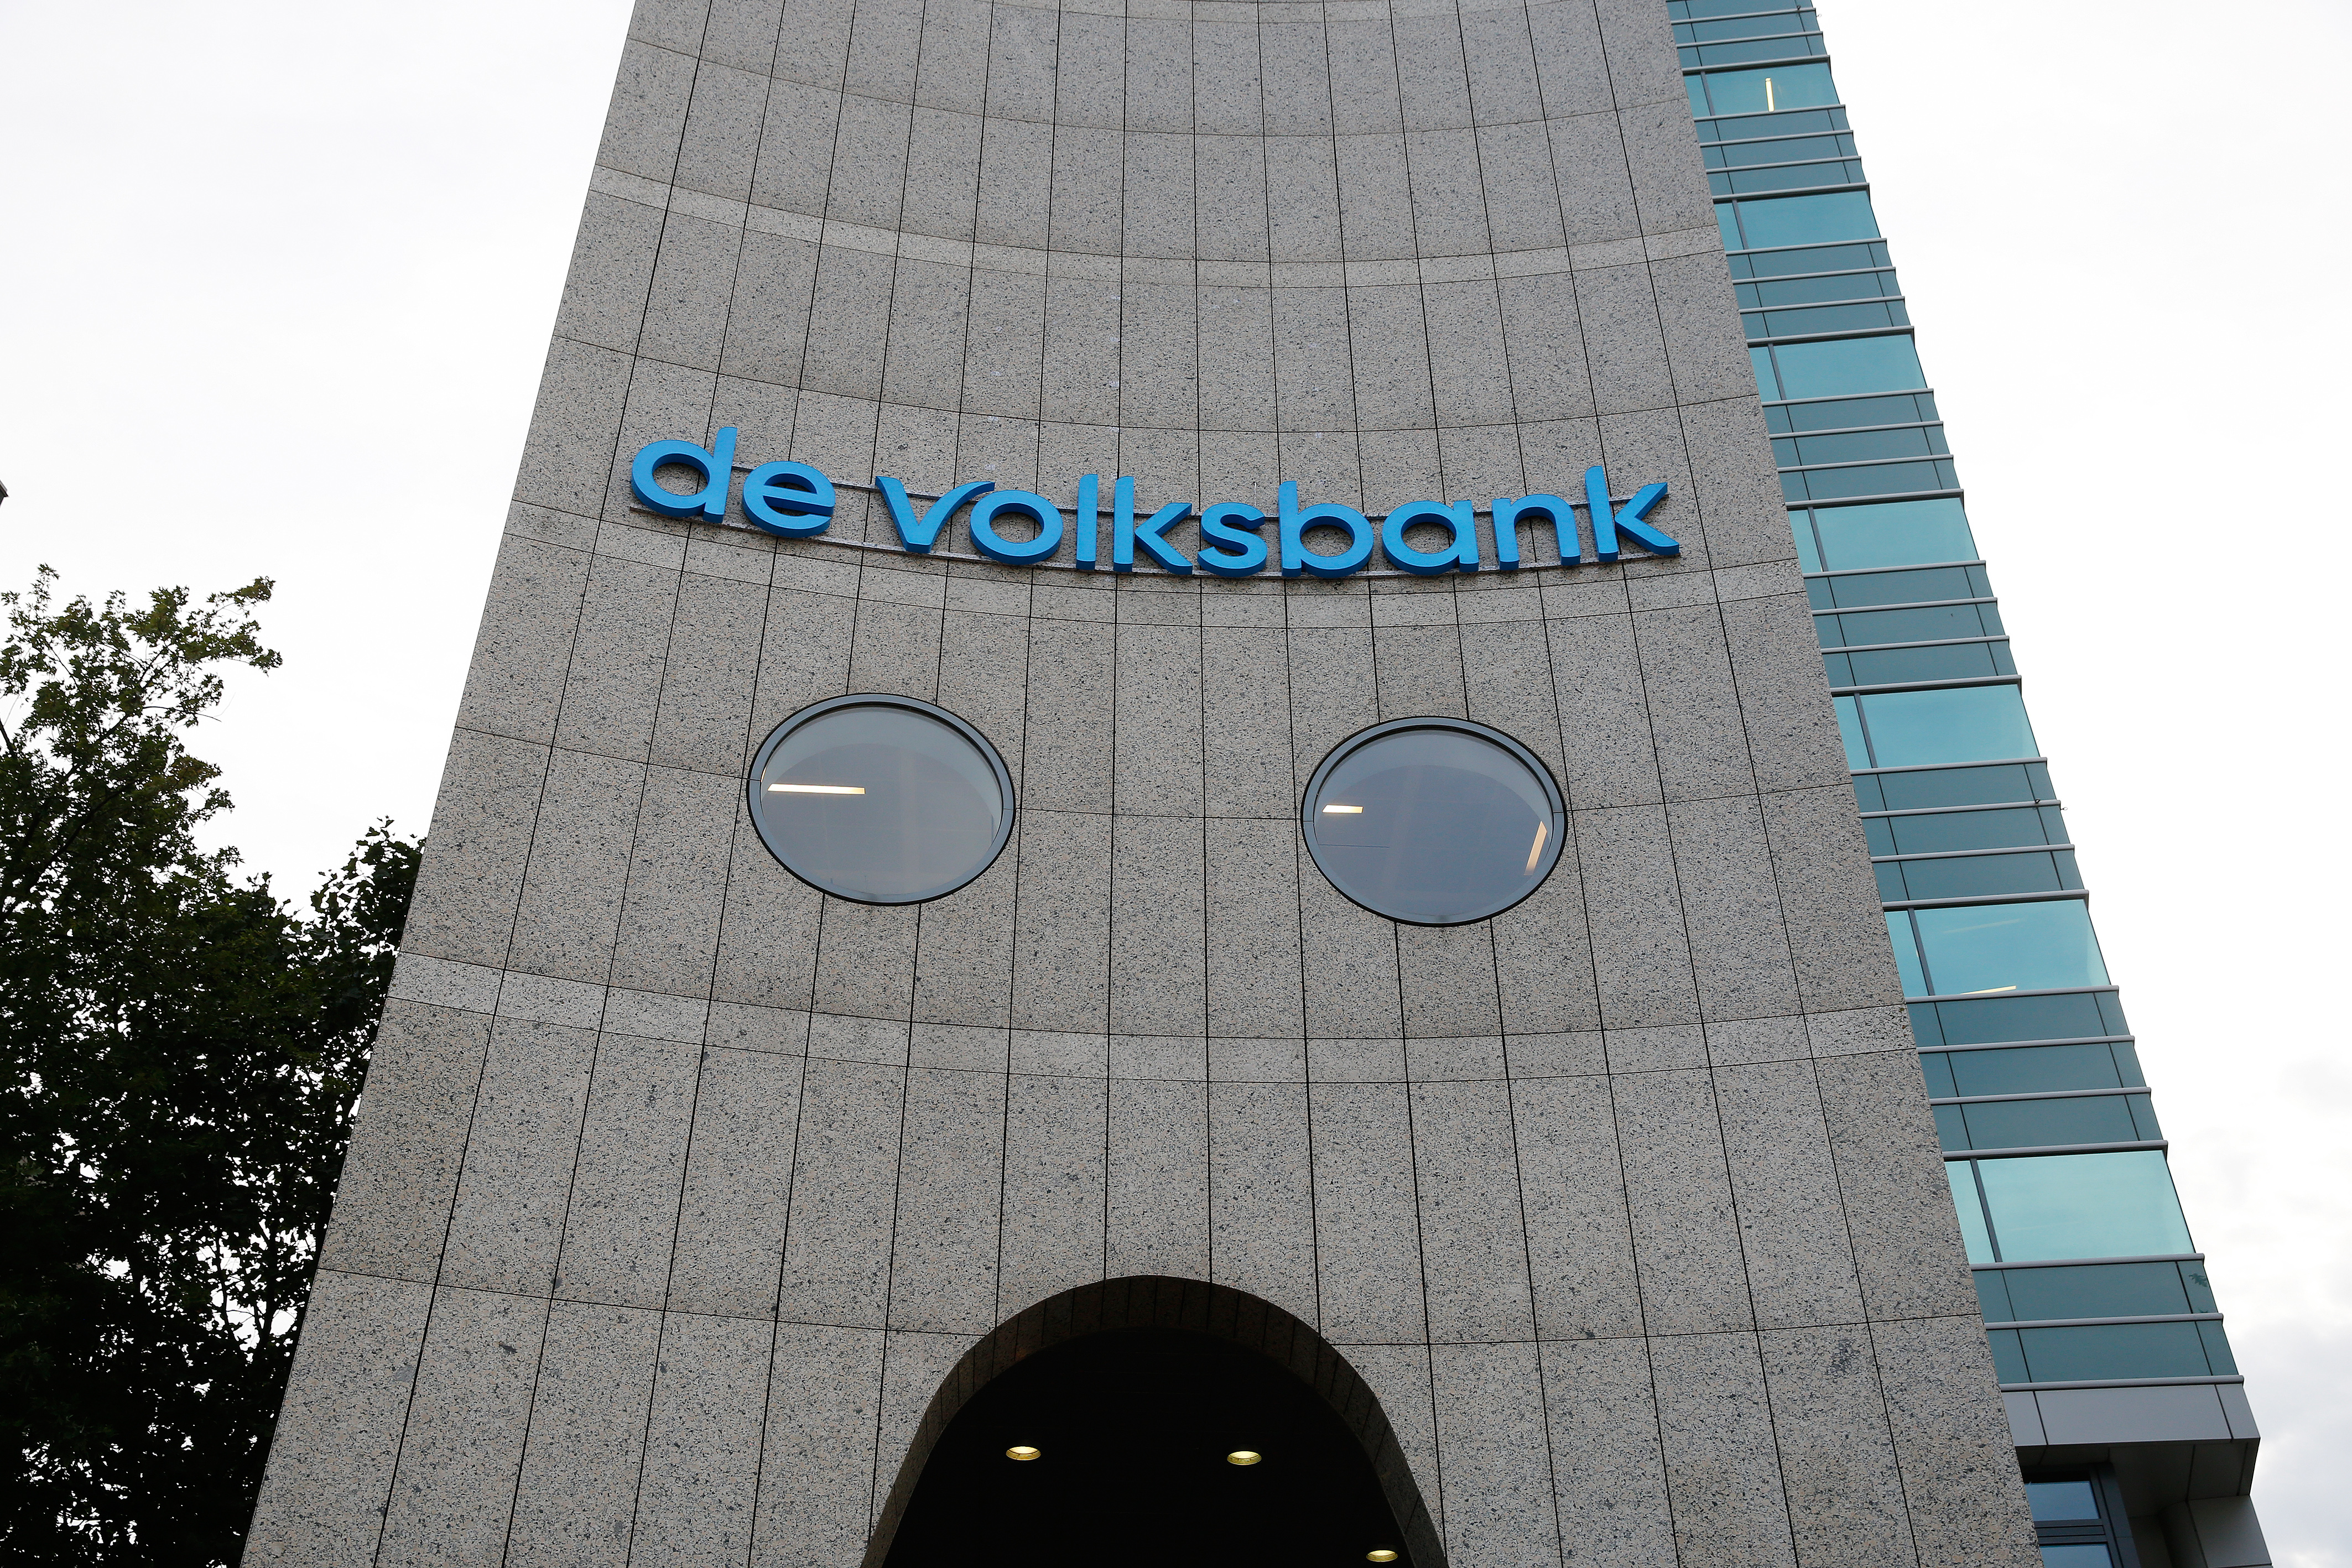 volksbank